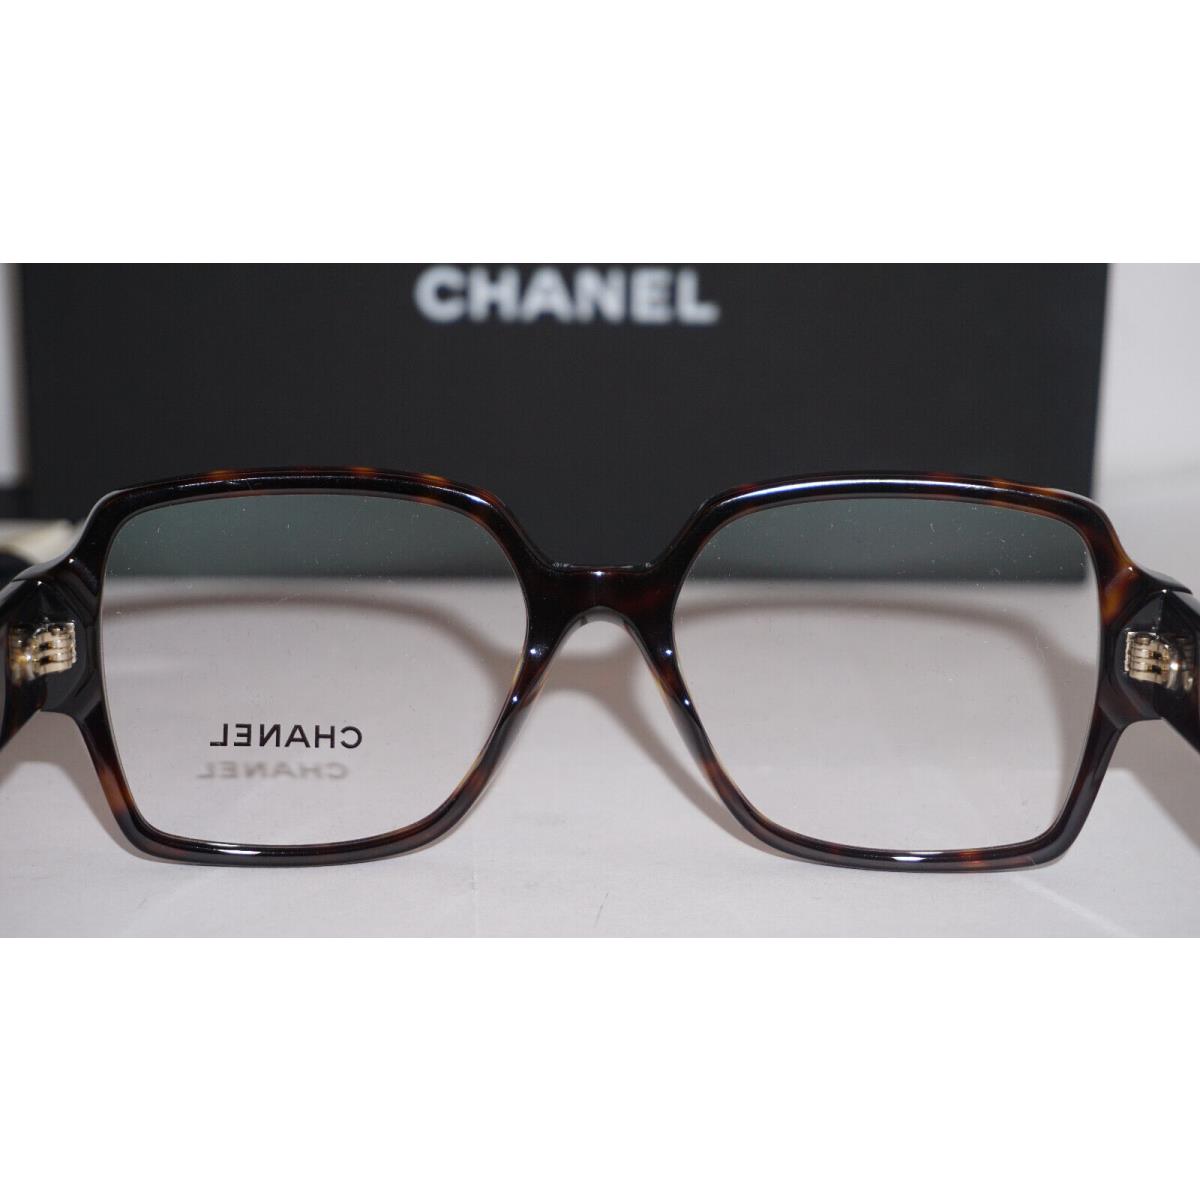 Chanel Eyeglasses Square Dark Havana Demo Len CH3438 C.714 54 17 140 - Chanel  eyeglasses 